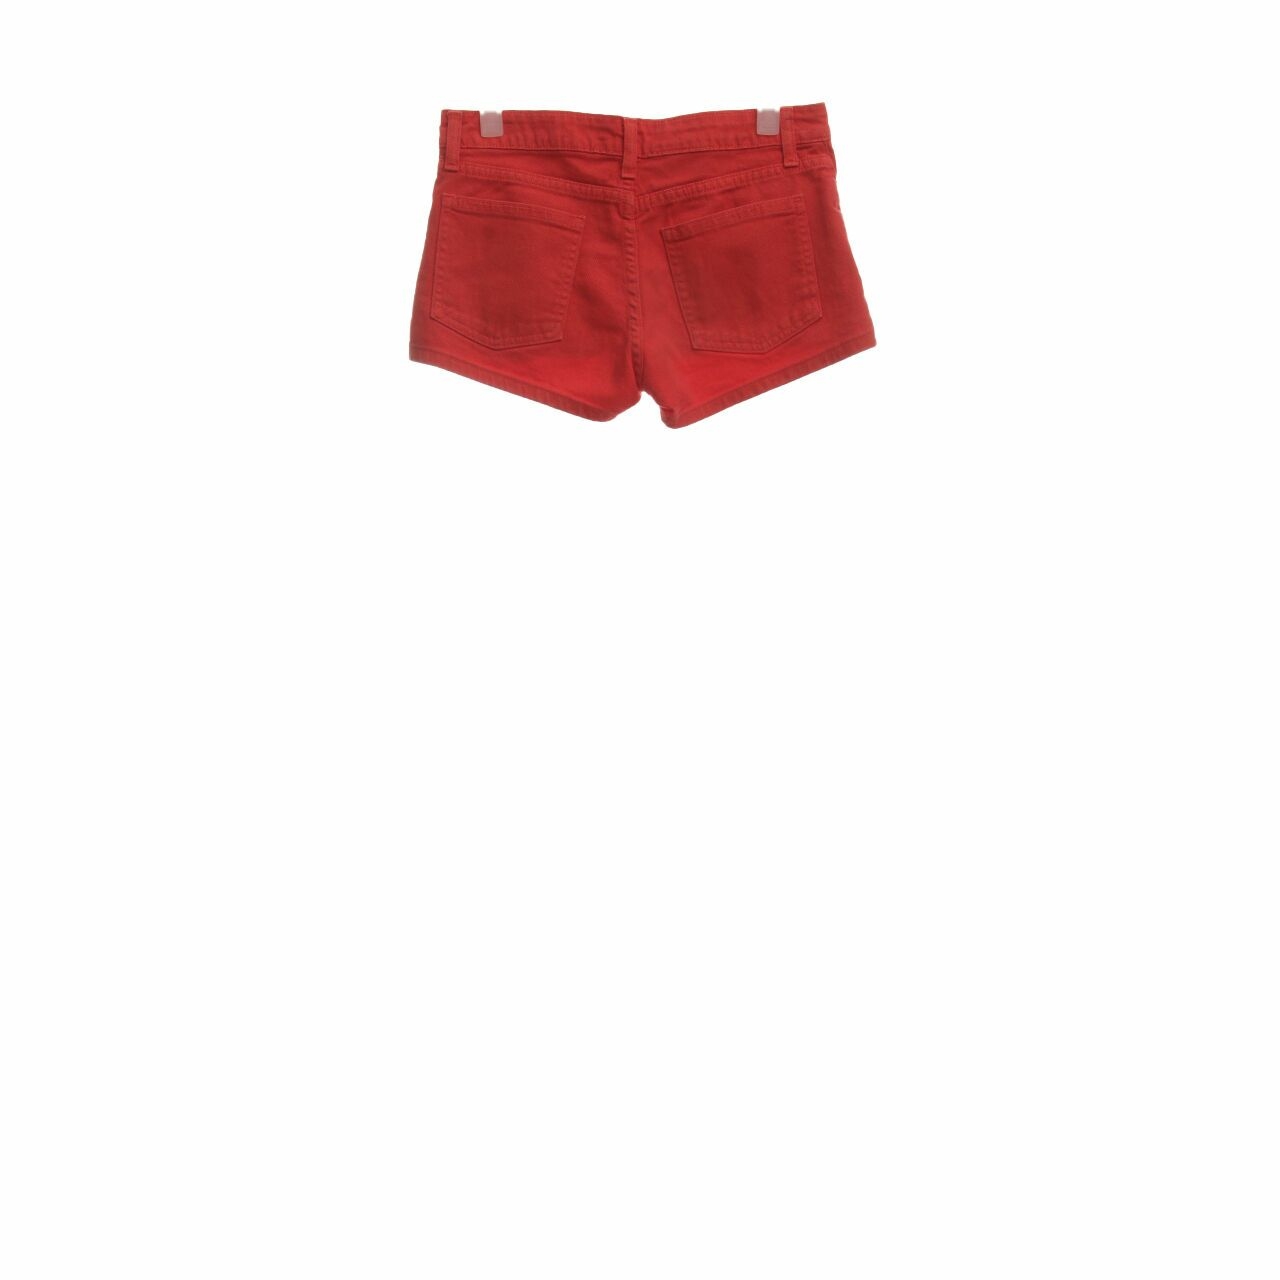 American Apparel Red Short Pants